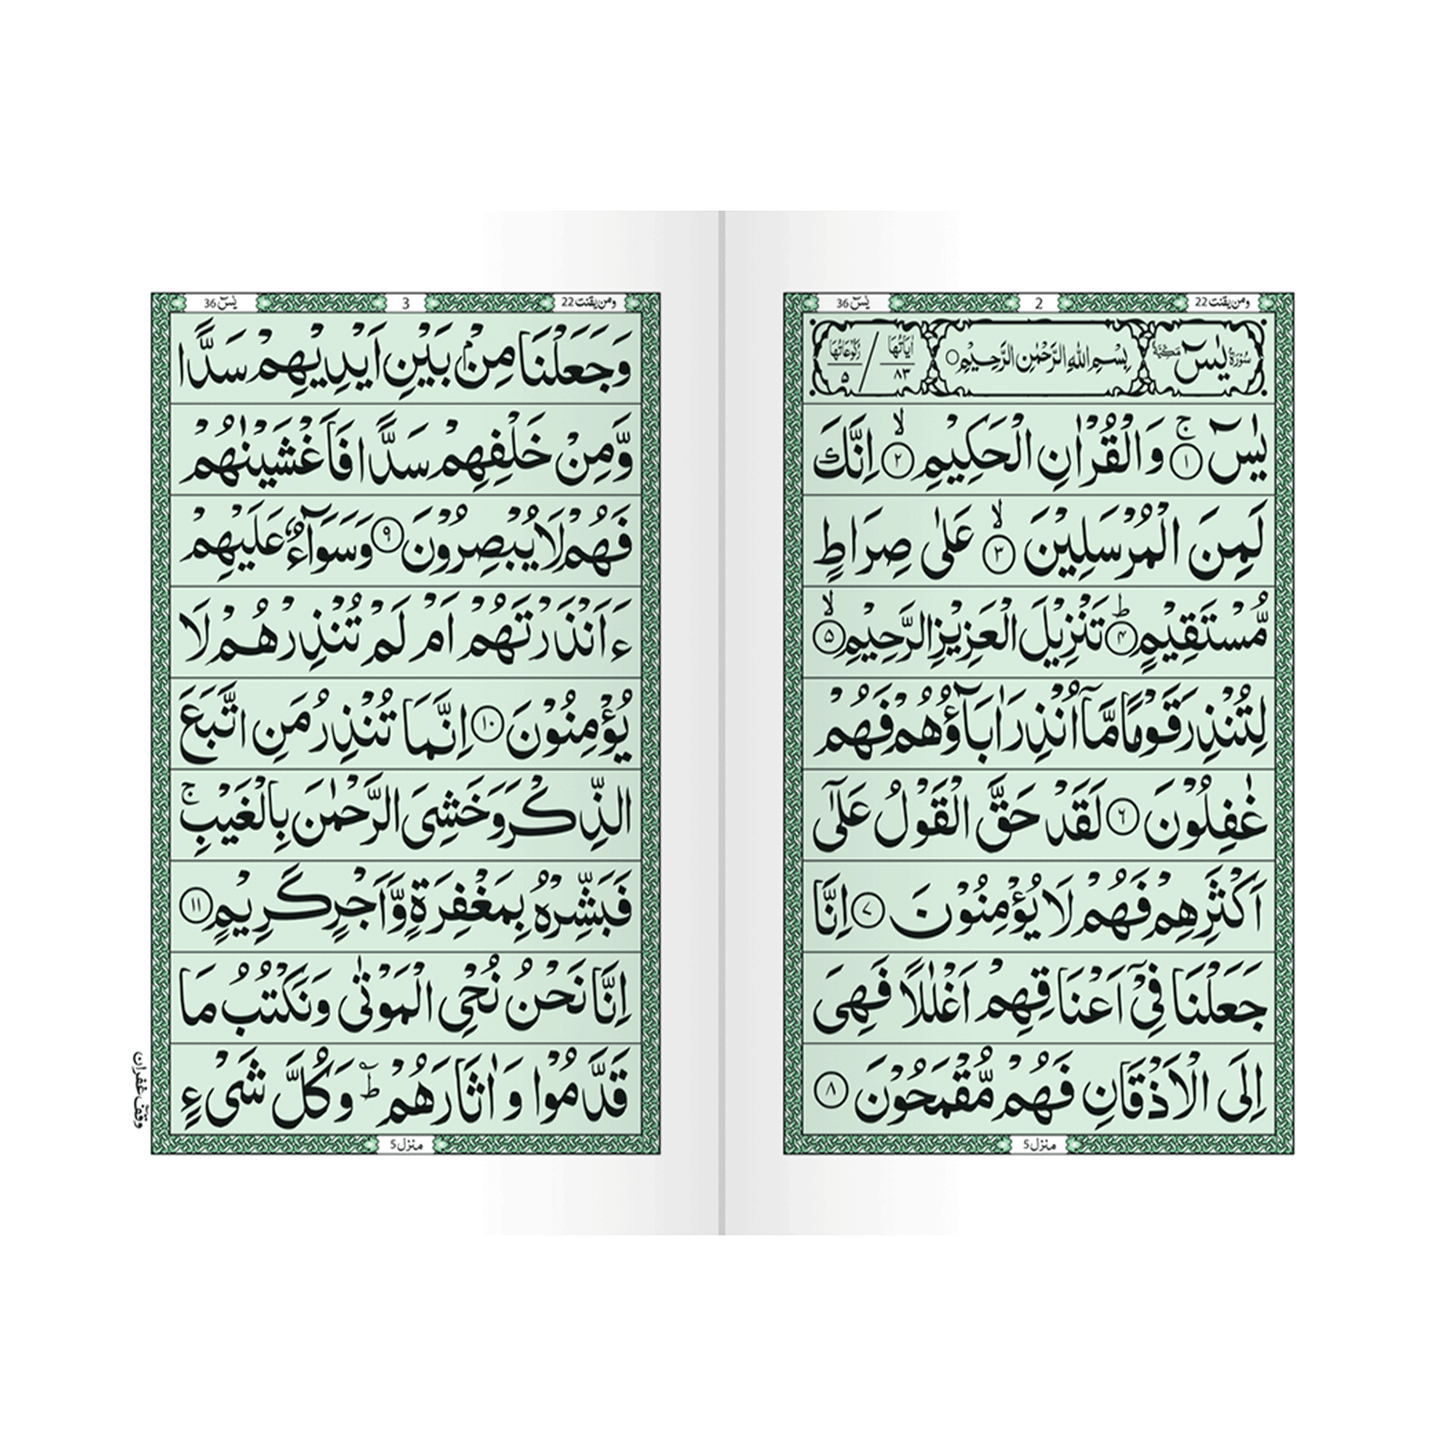 [IK91] Panj Surah (Without Translation)